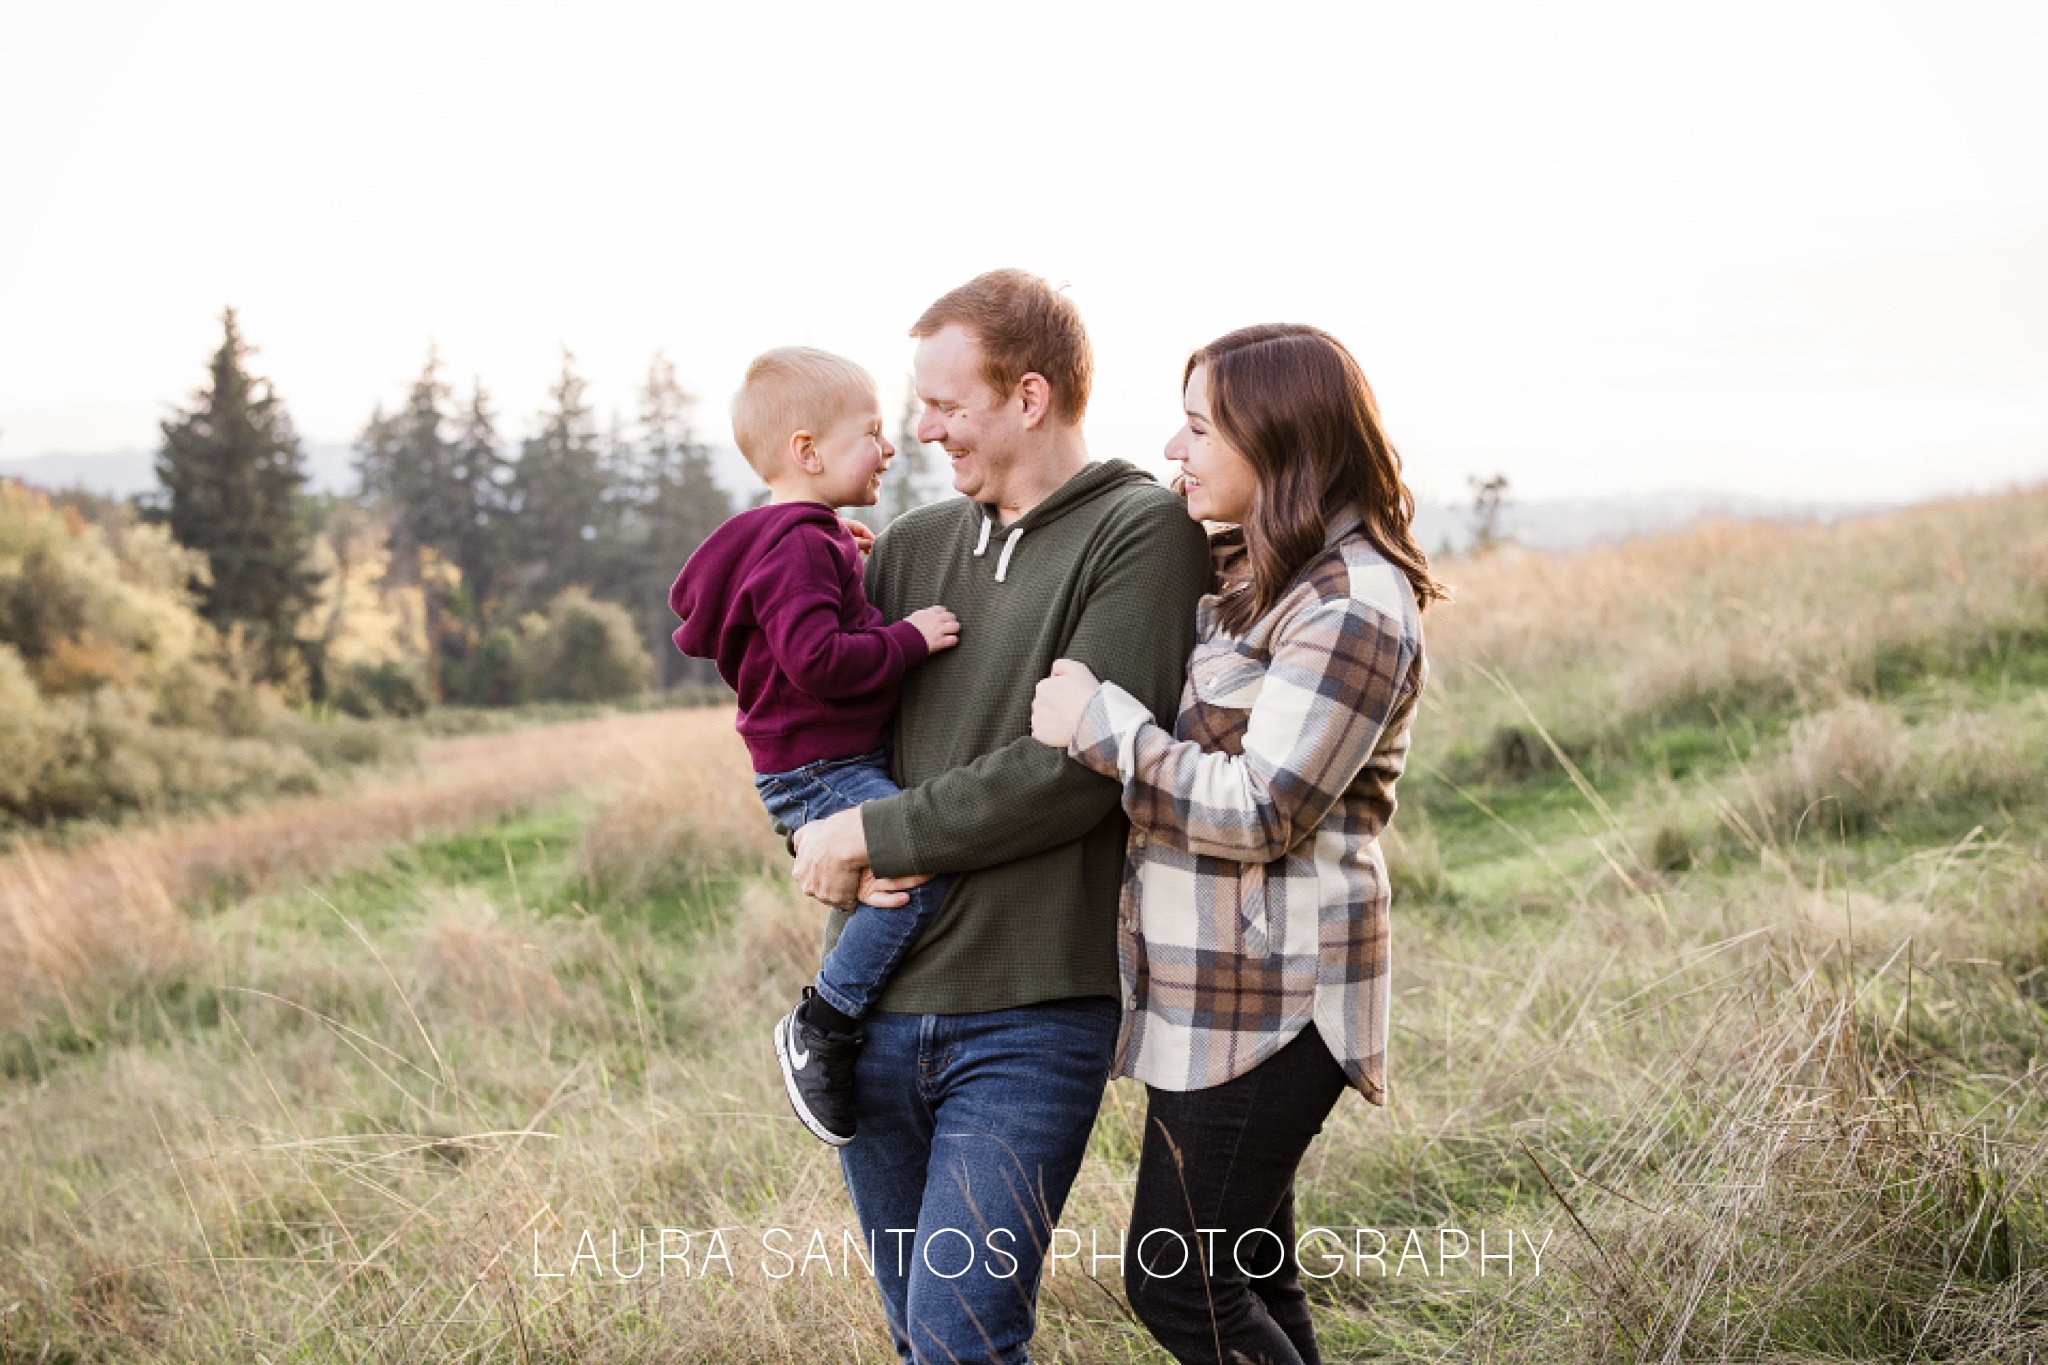 Laura Santos Photography Portland Oregon Family Photographer_4496.jpg